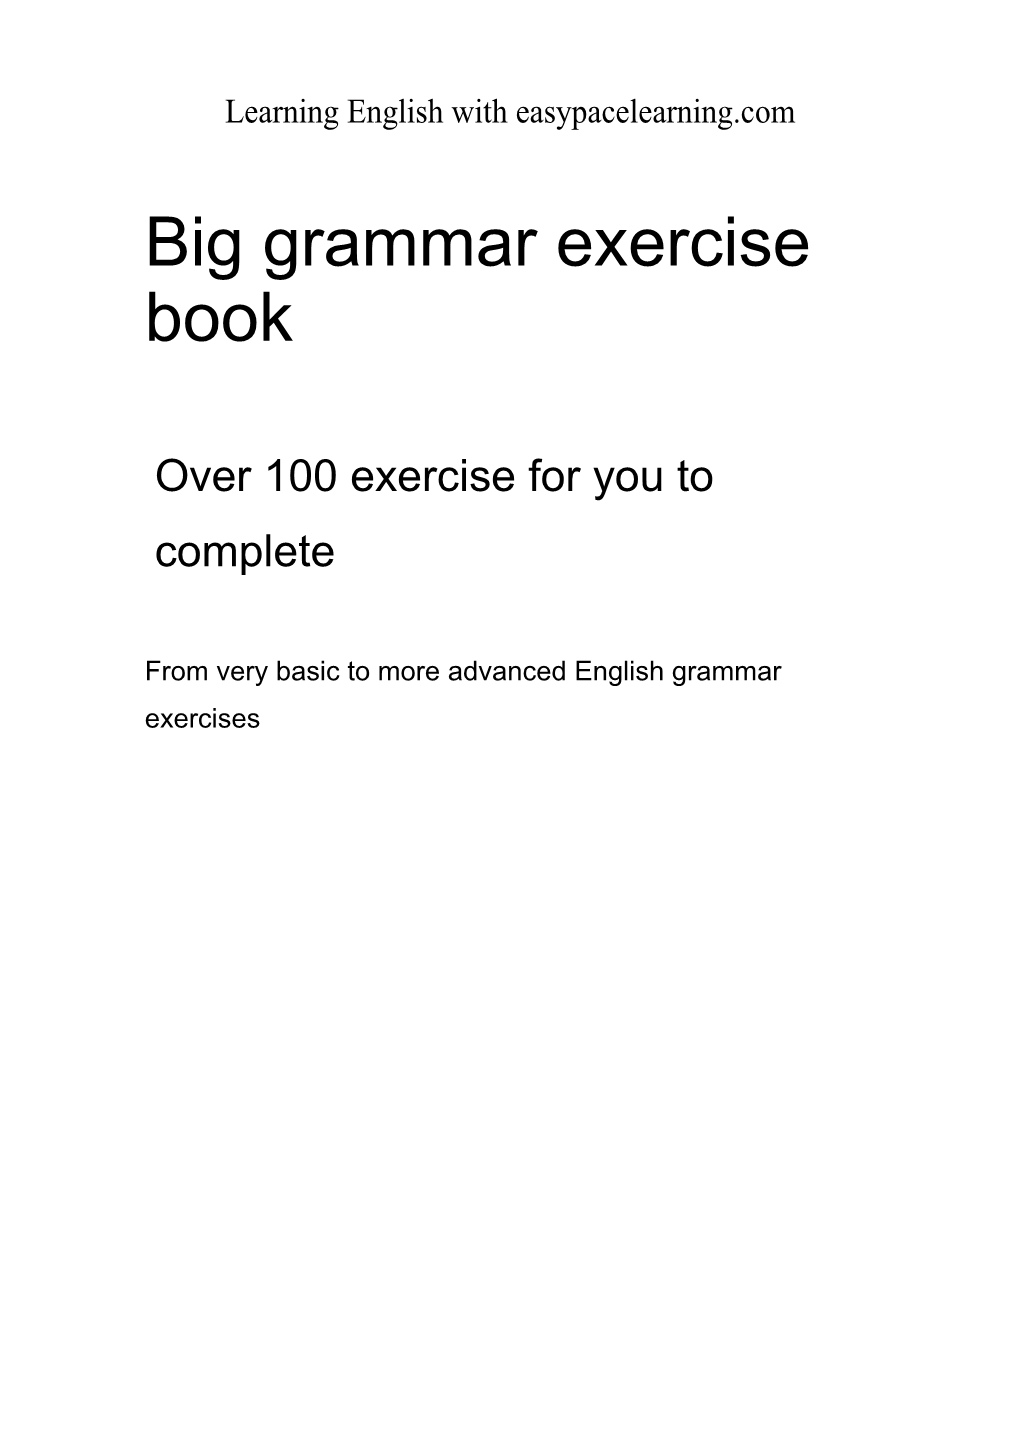 Big Grammar Exercise Book